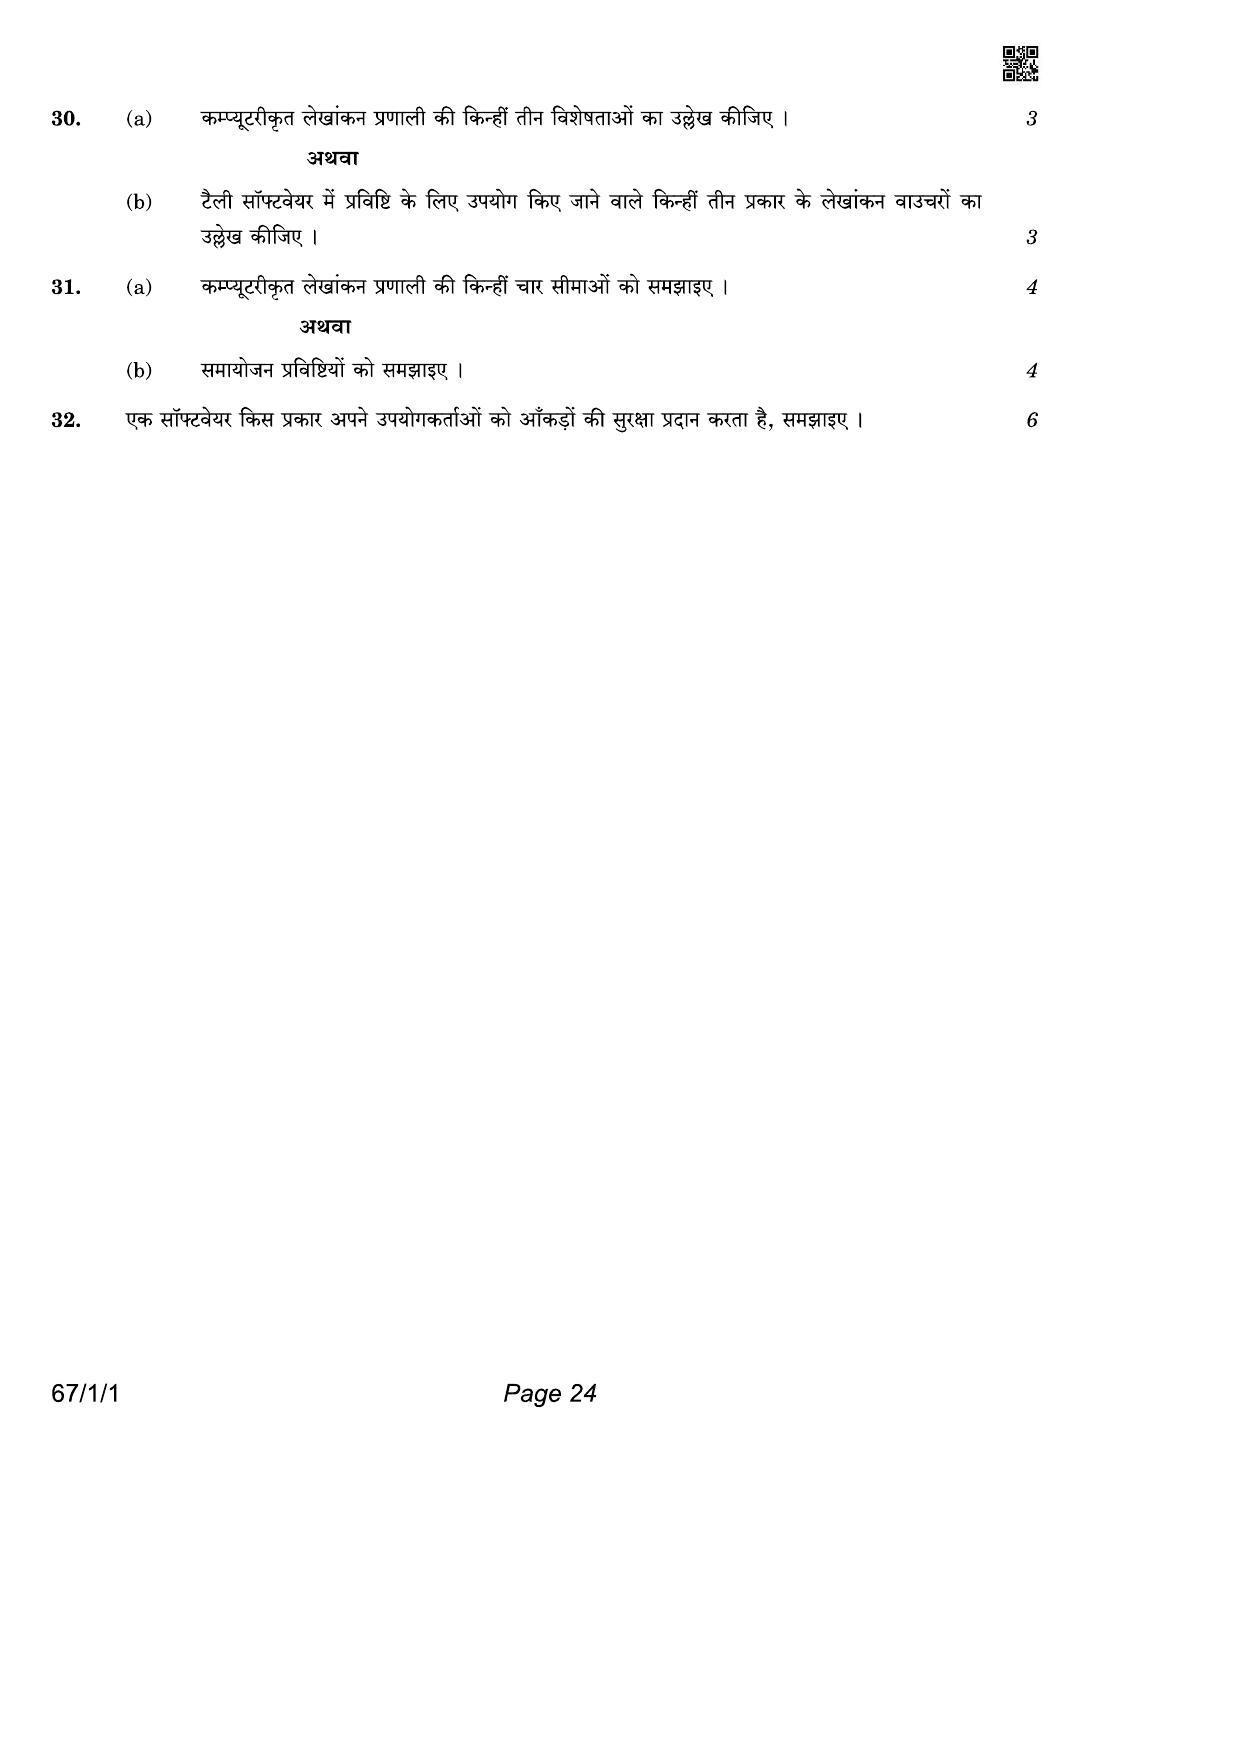 CBSE Class 12 QP_055_Accountancy 2021 Compartment Question Paper - Page 24